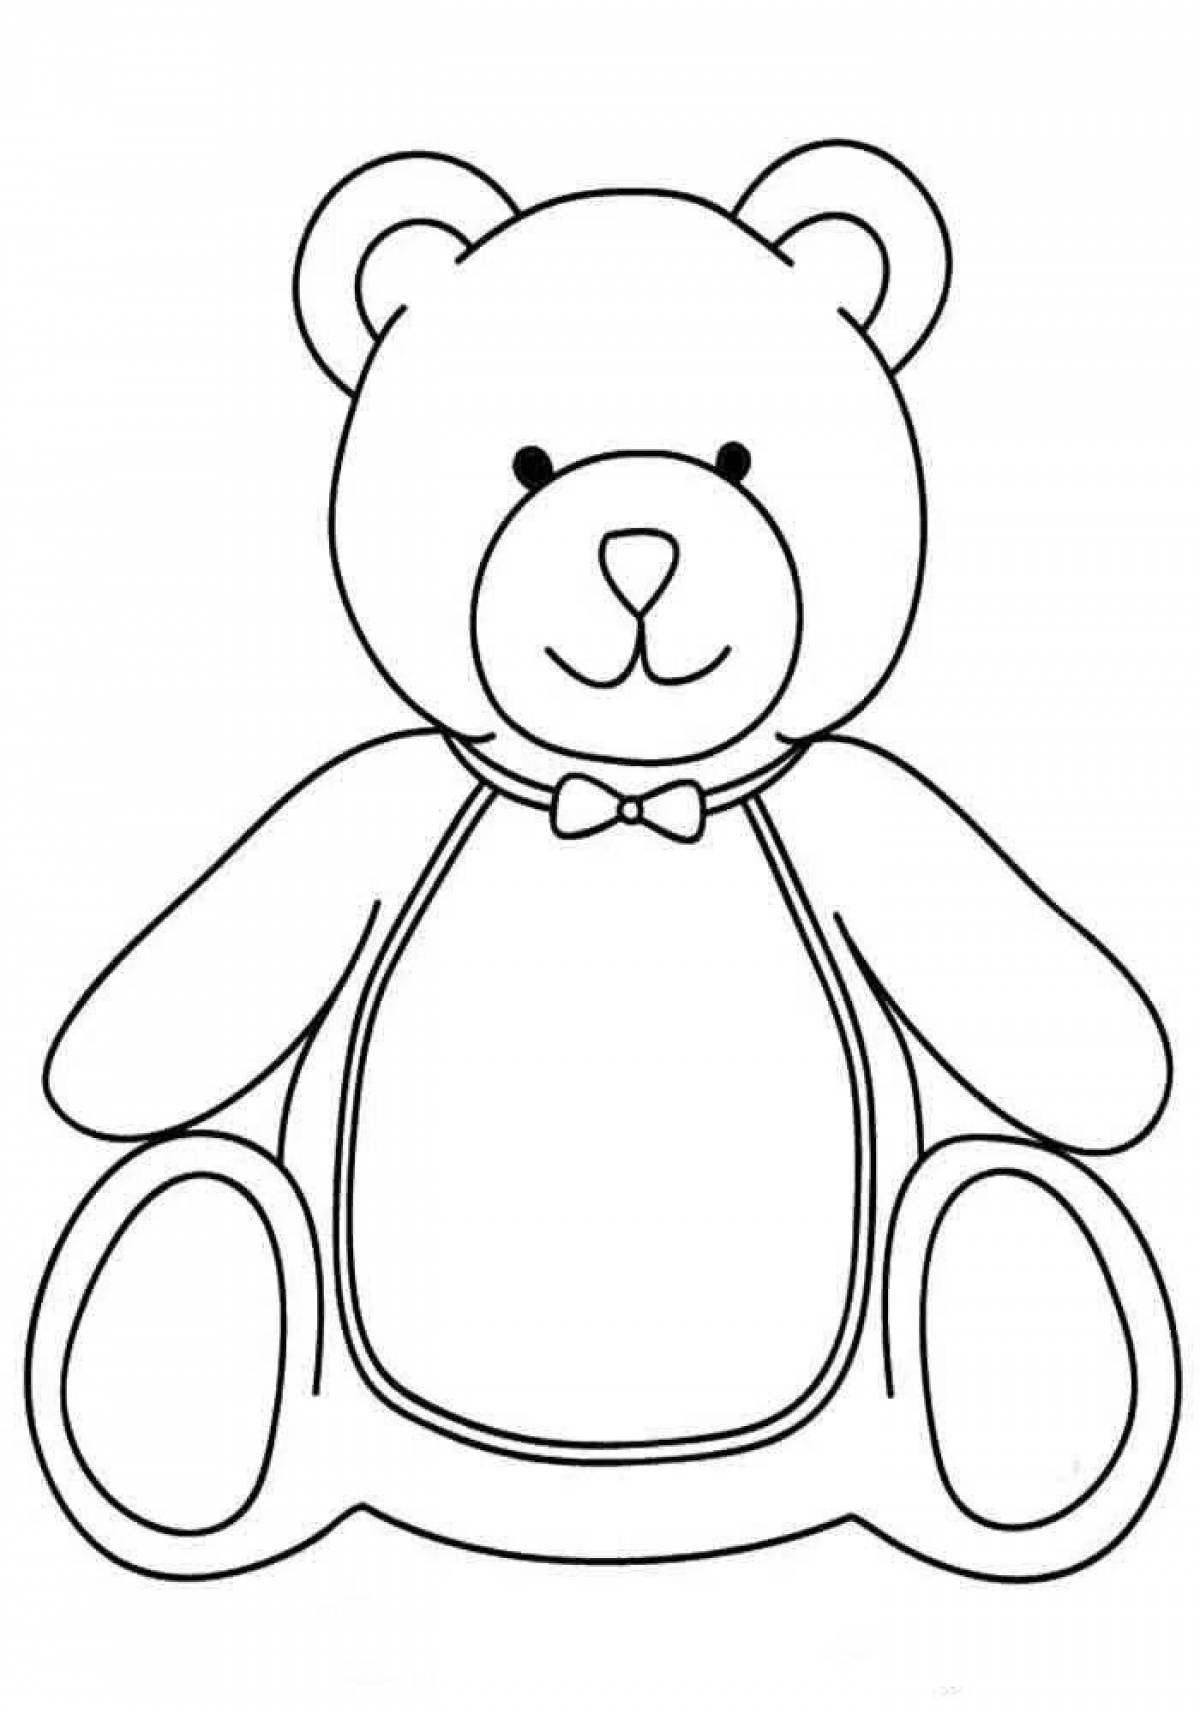 Fun drawing of a teddy bear